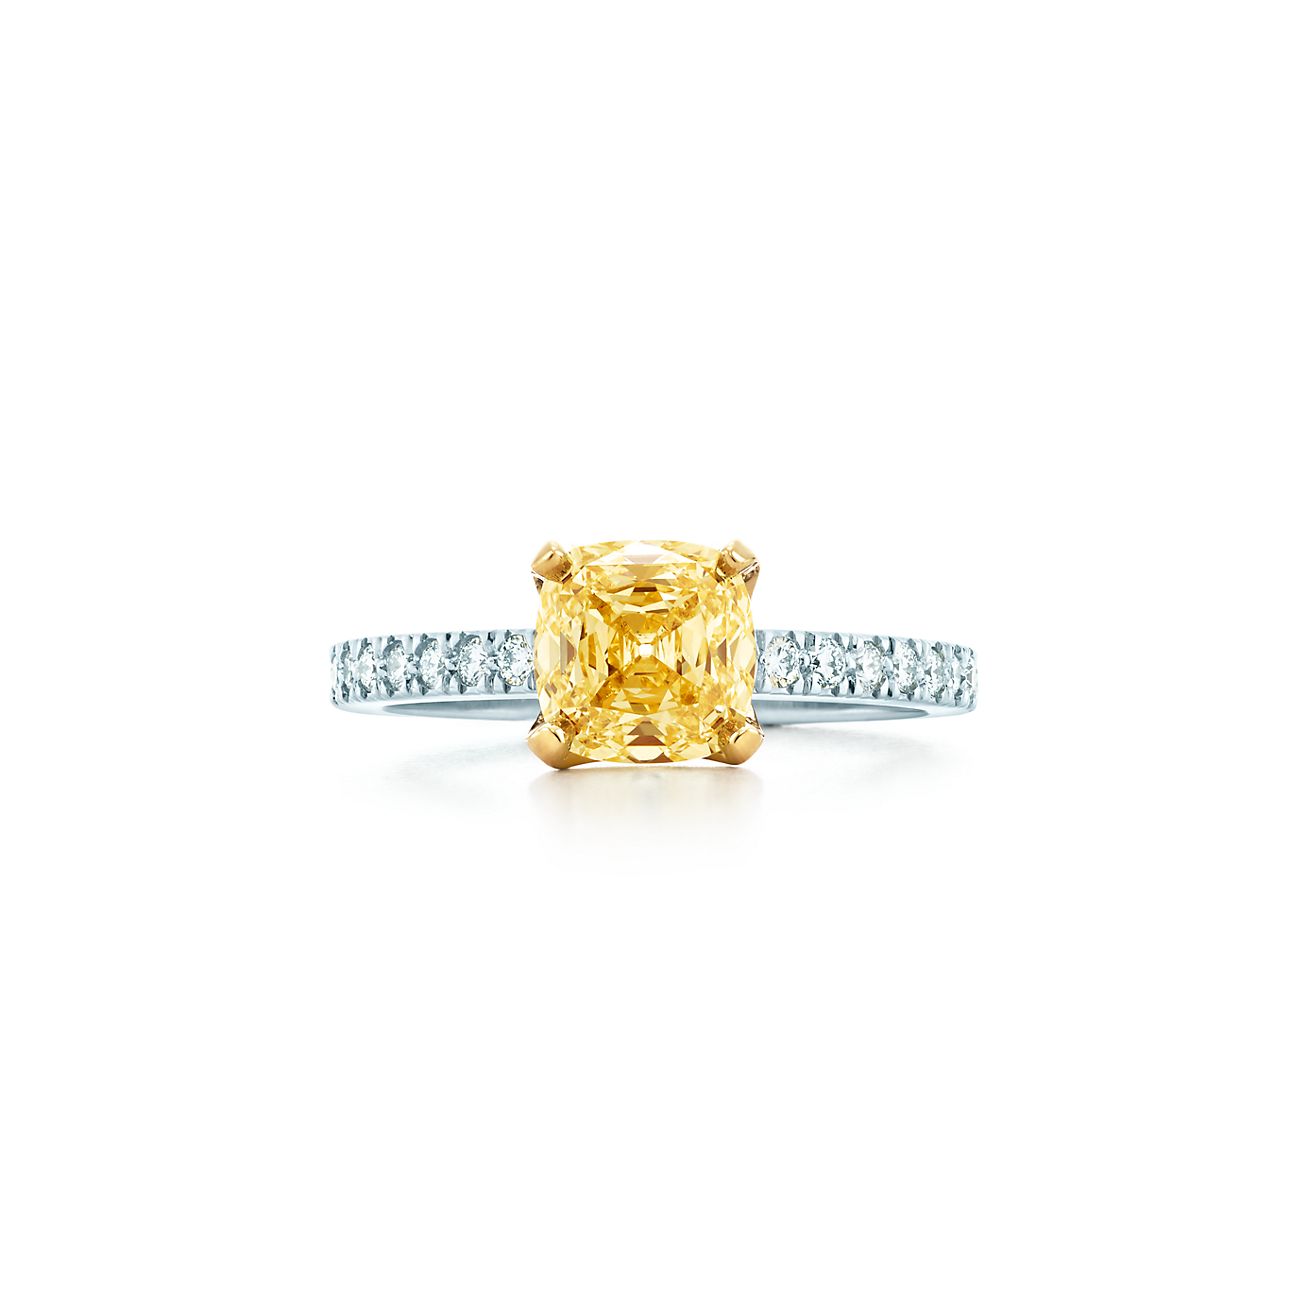 Tiffany Novo® ring in platinum and 18k 